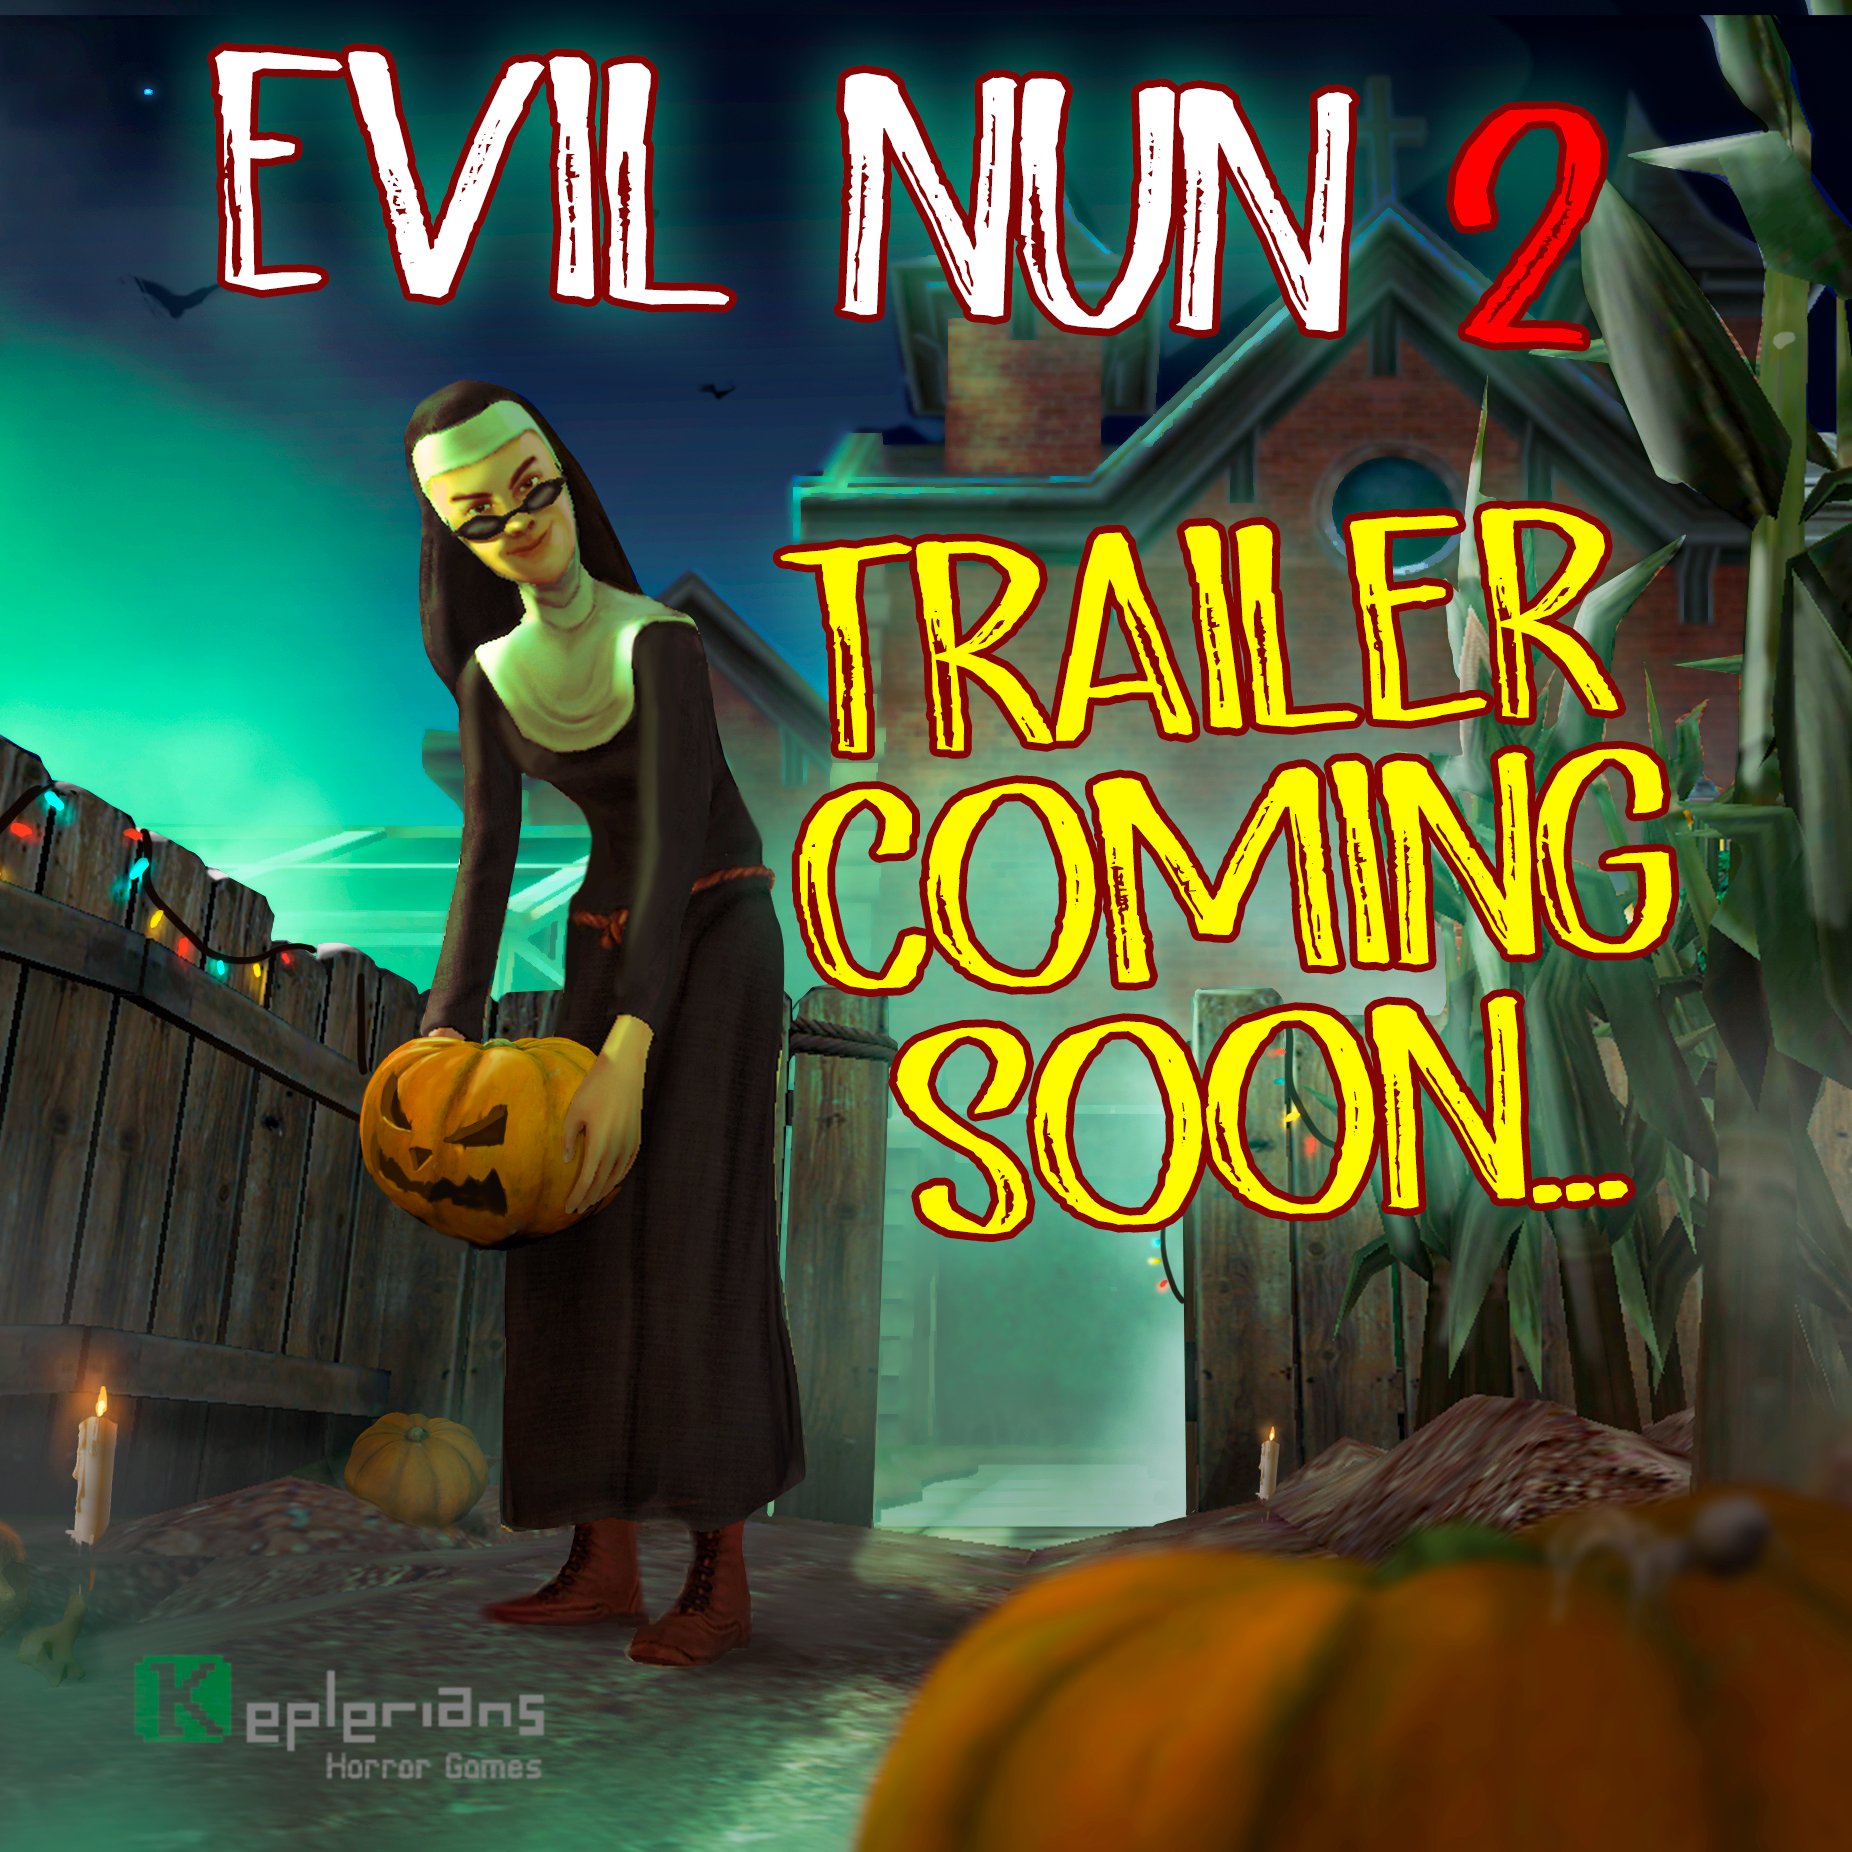 Evil Nun: Horror at School - Apps on Google Play